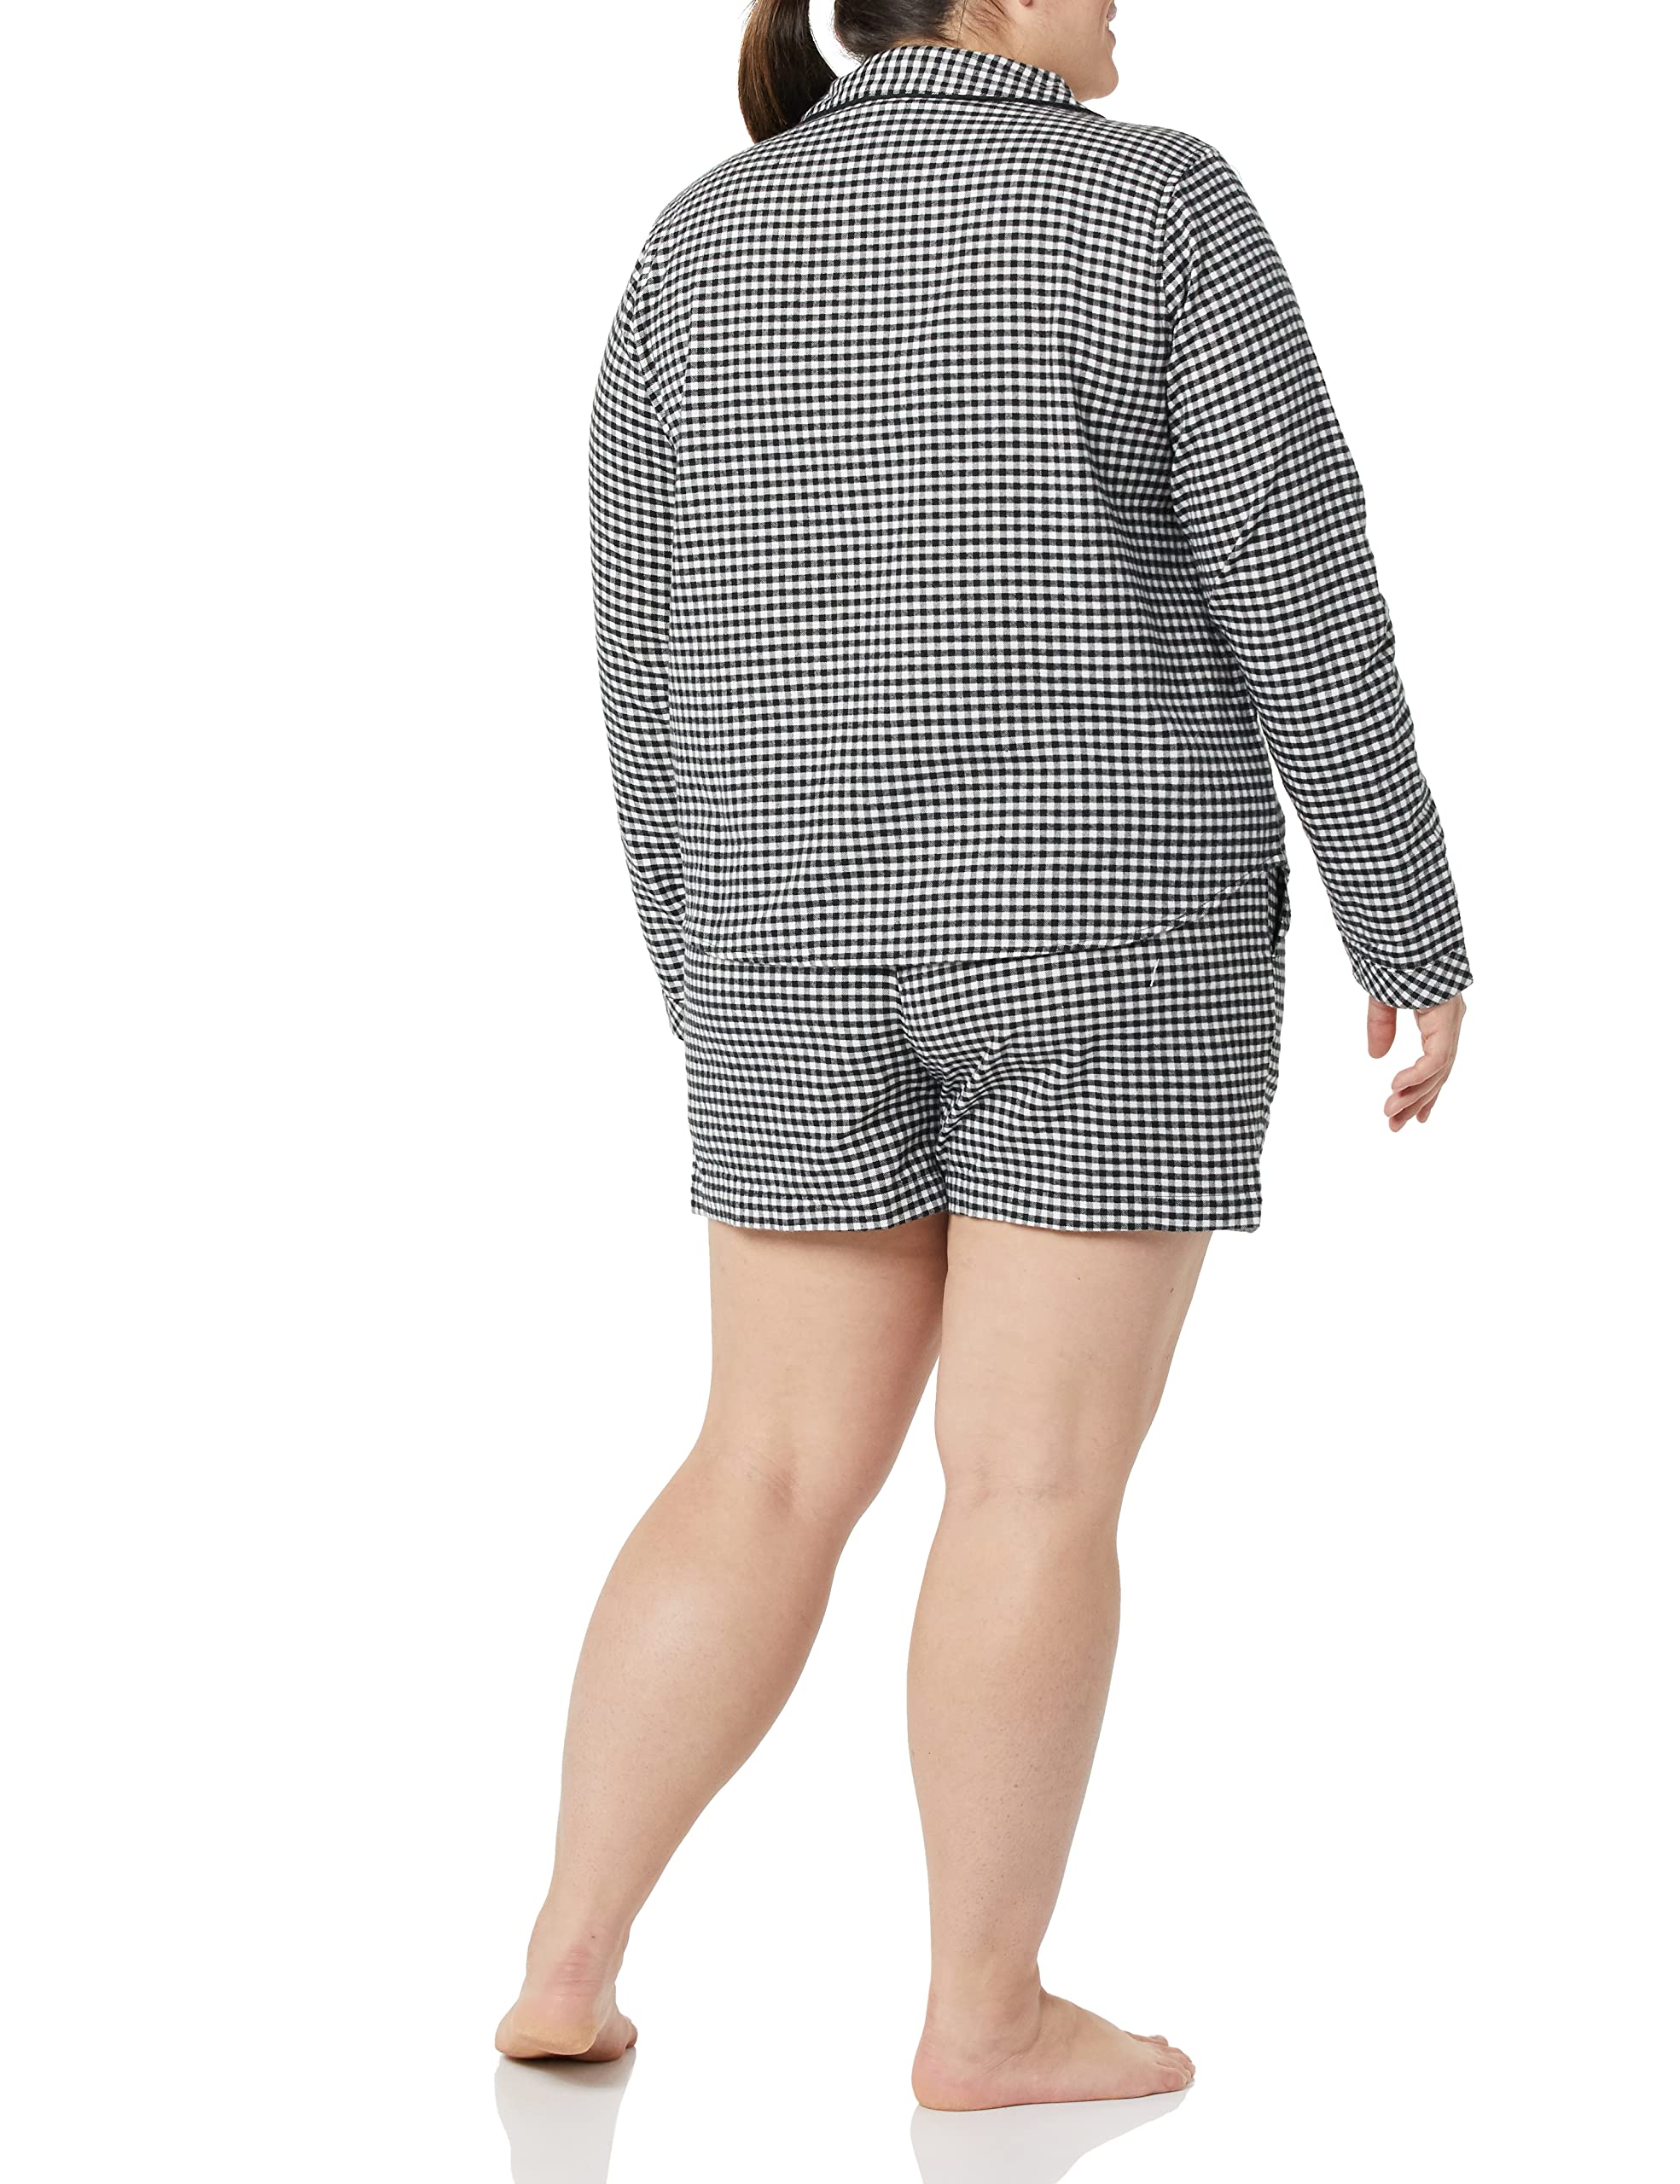 Amazon Essentials Women's Lightweight Woven Flannel Pajama Set with Shorts